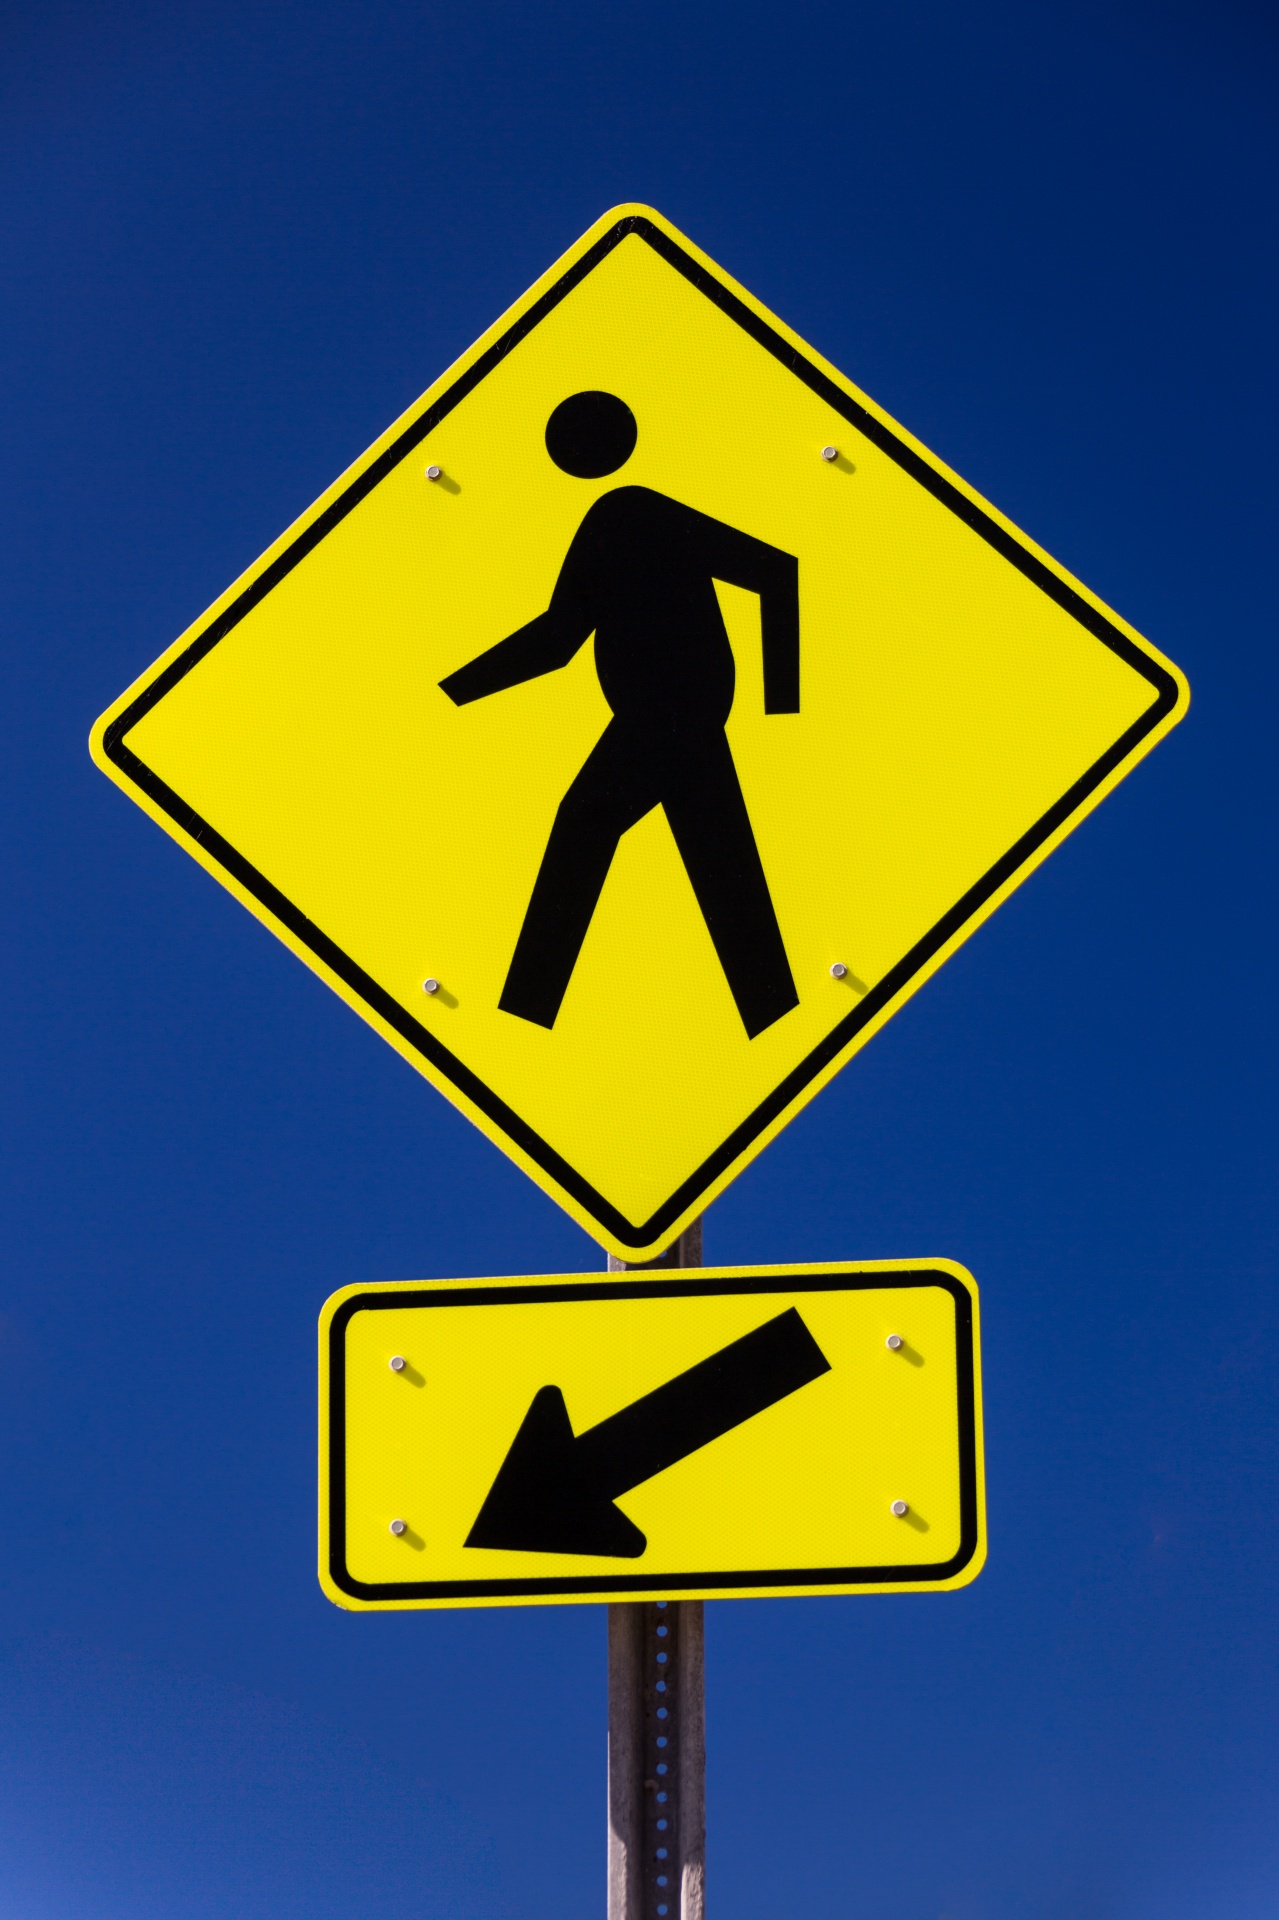 Pedestrian crossing sign against blue sky